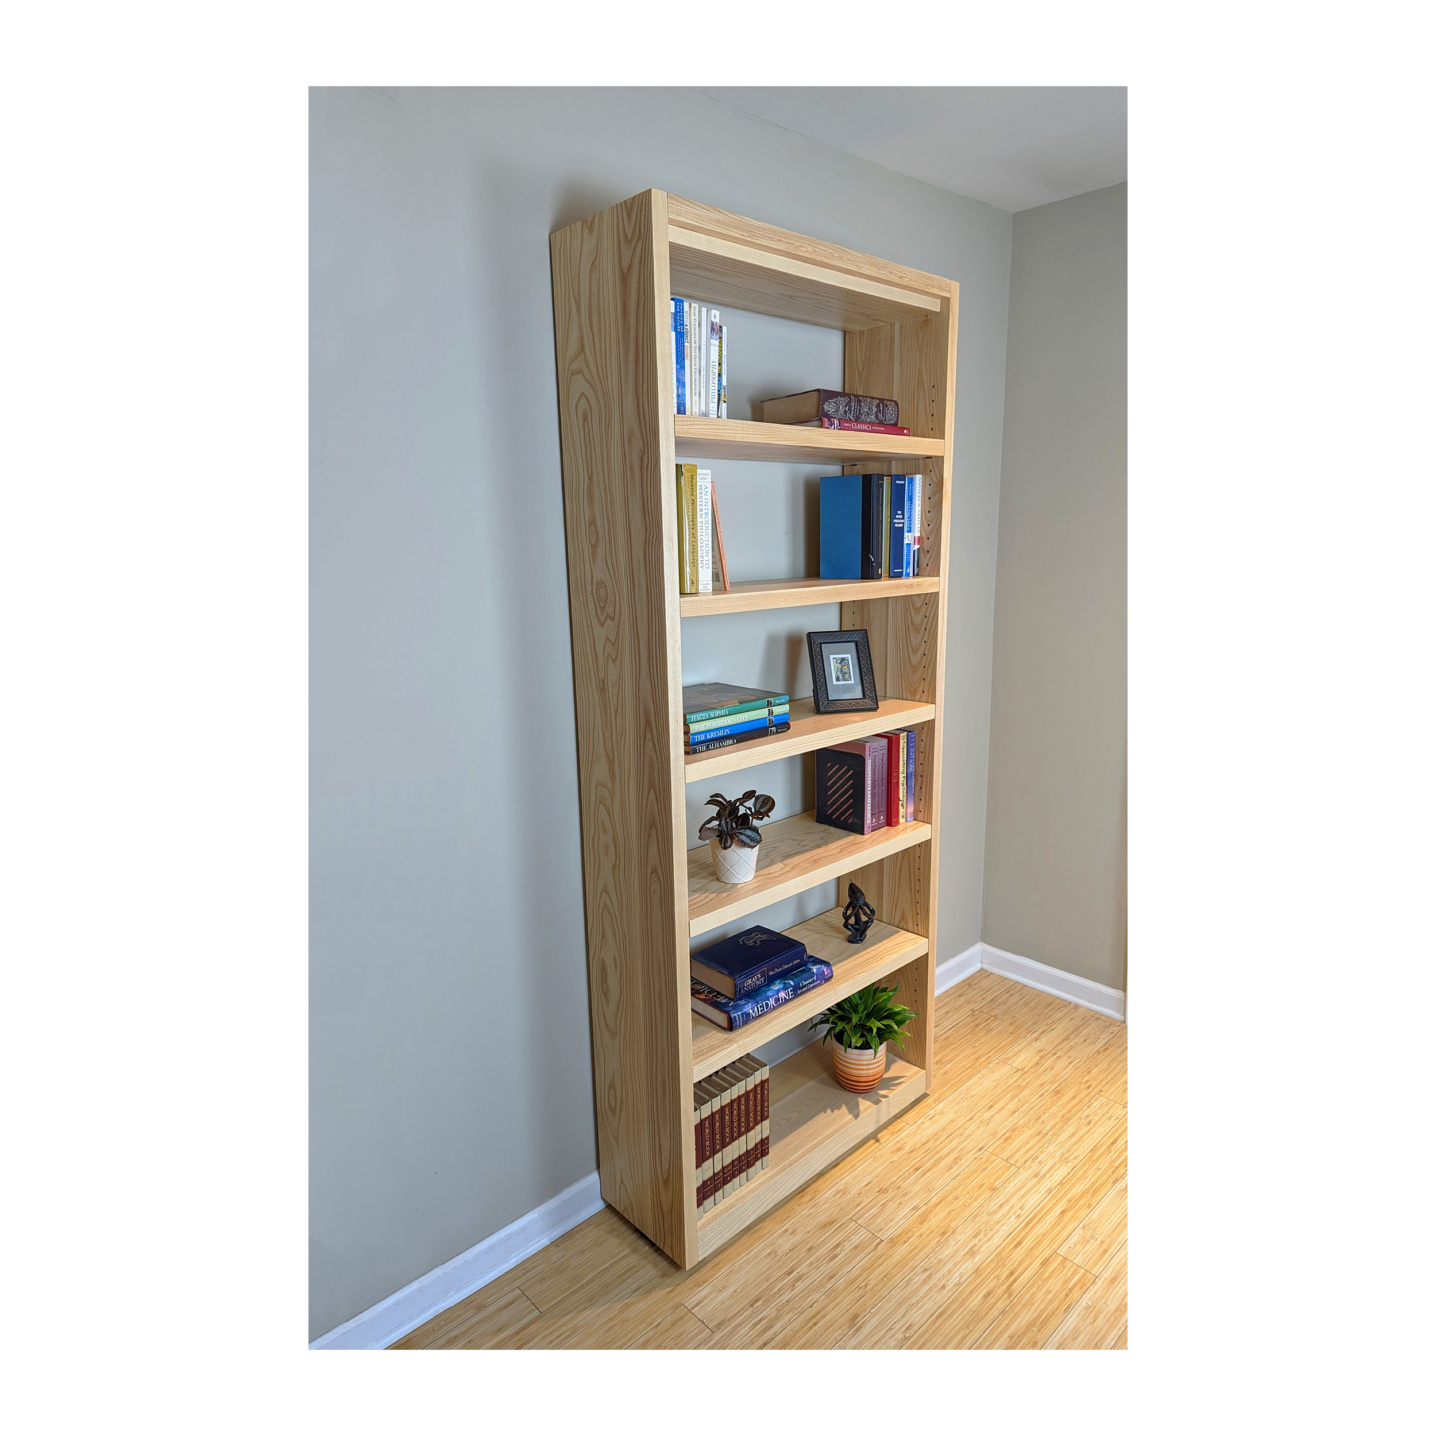 3 feet wide Nordic bookshelf